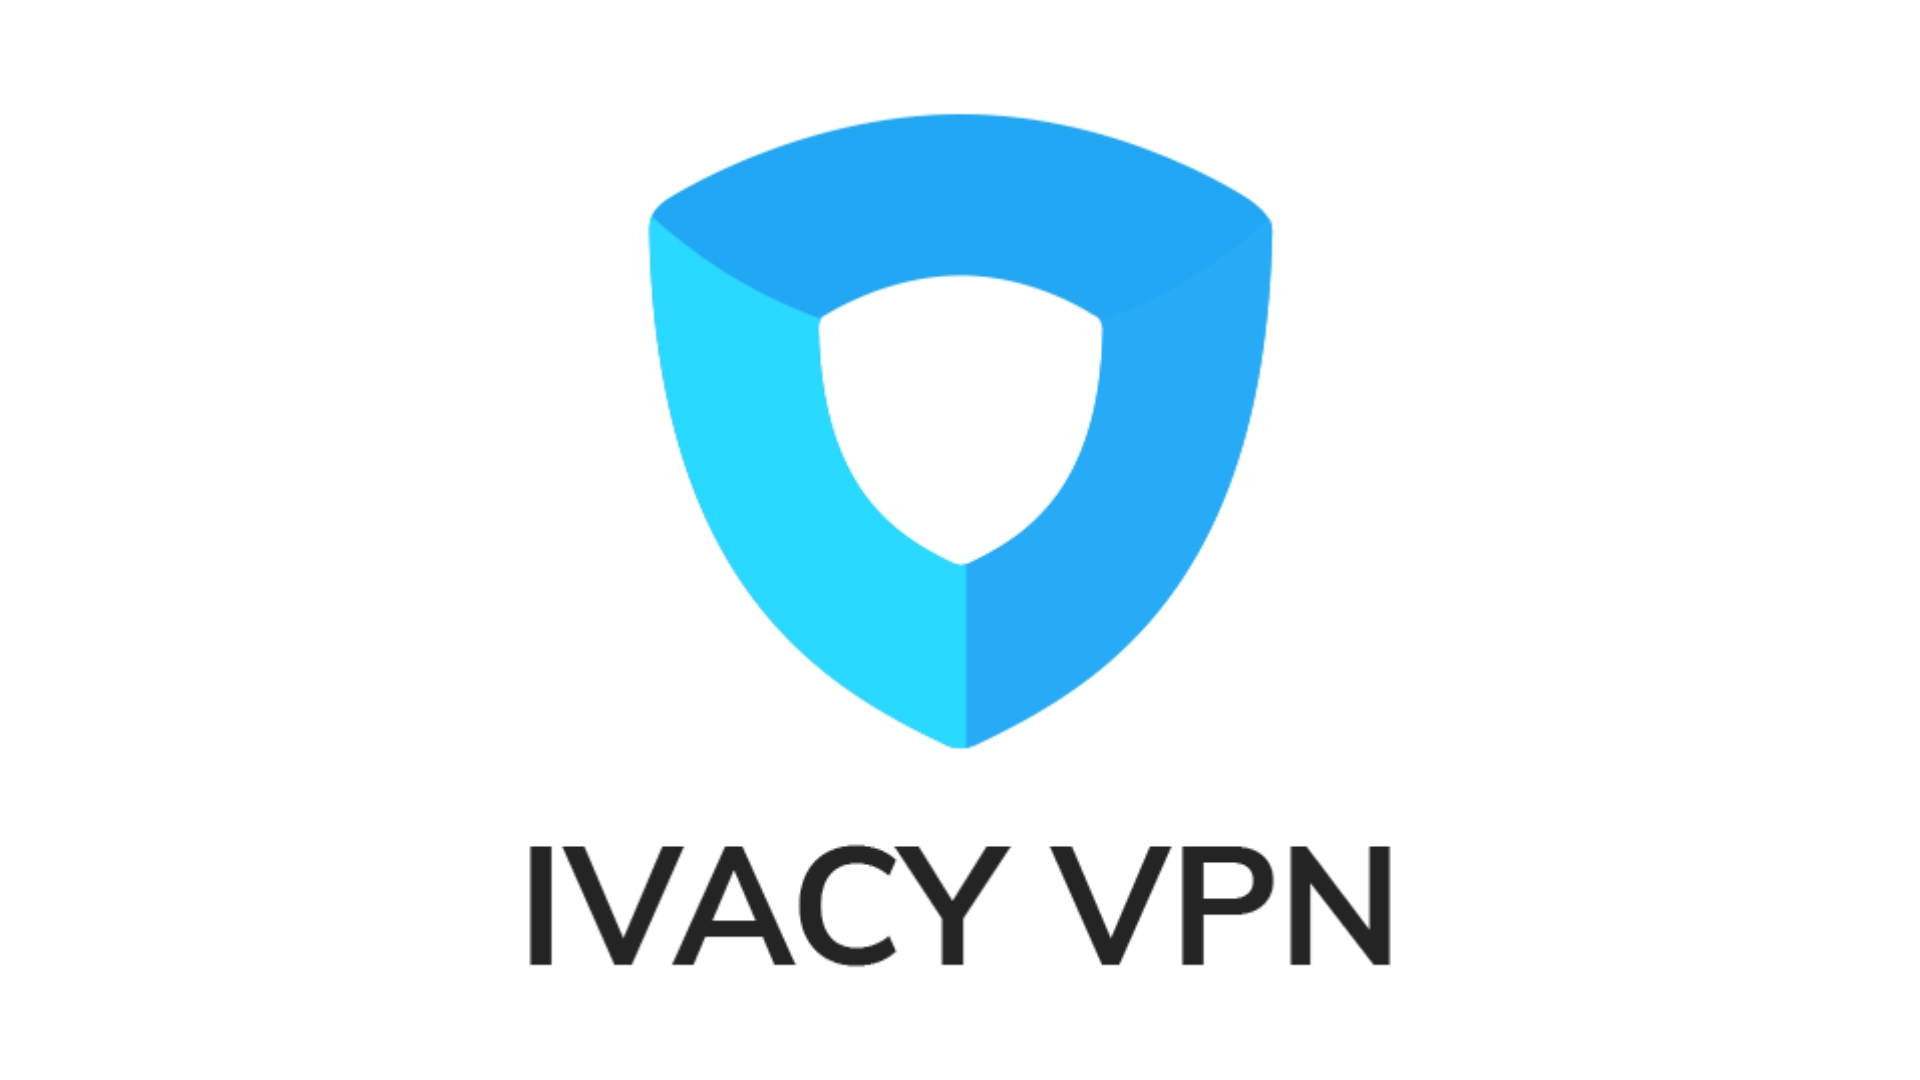 Best cheap VPN, option 2 - Ivacy VPN. An image shows its logo.